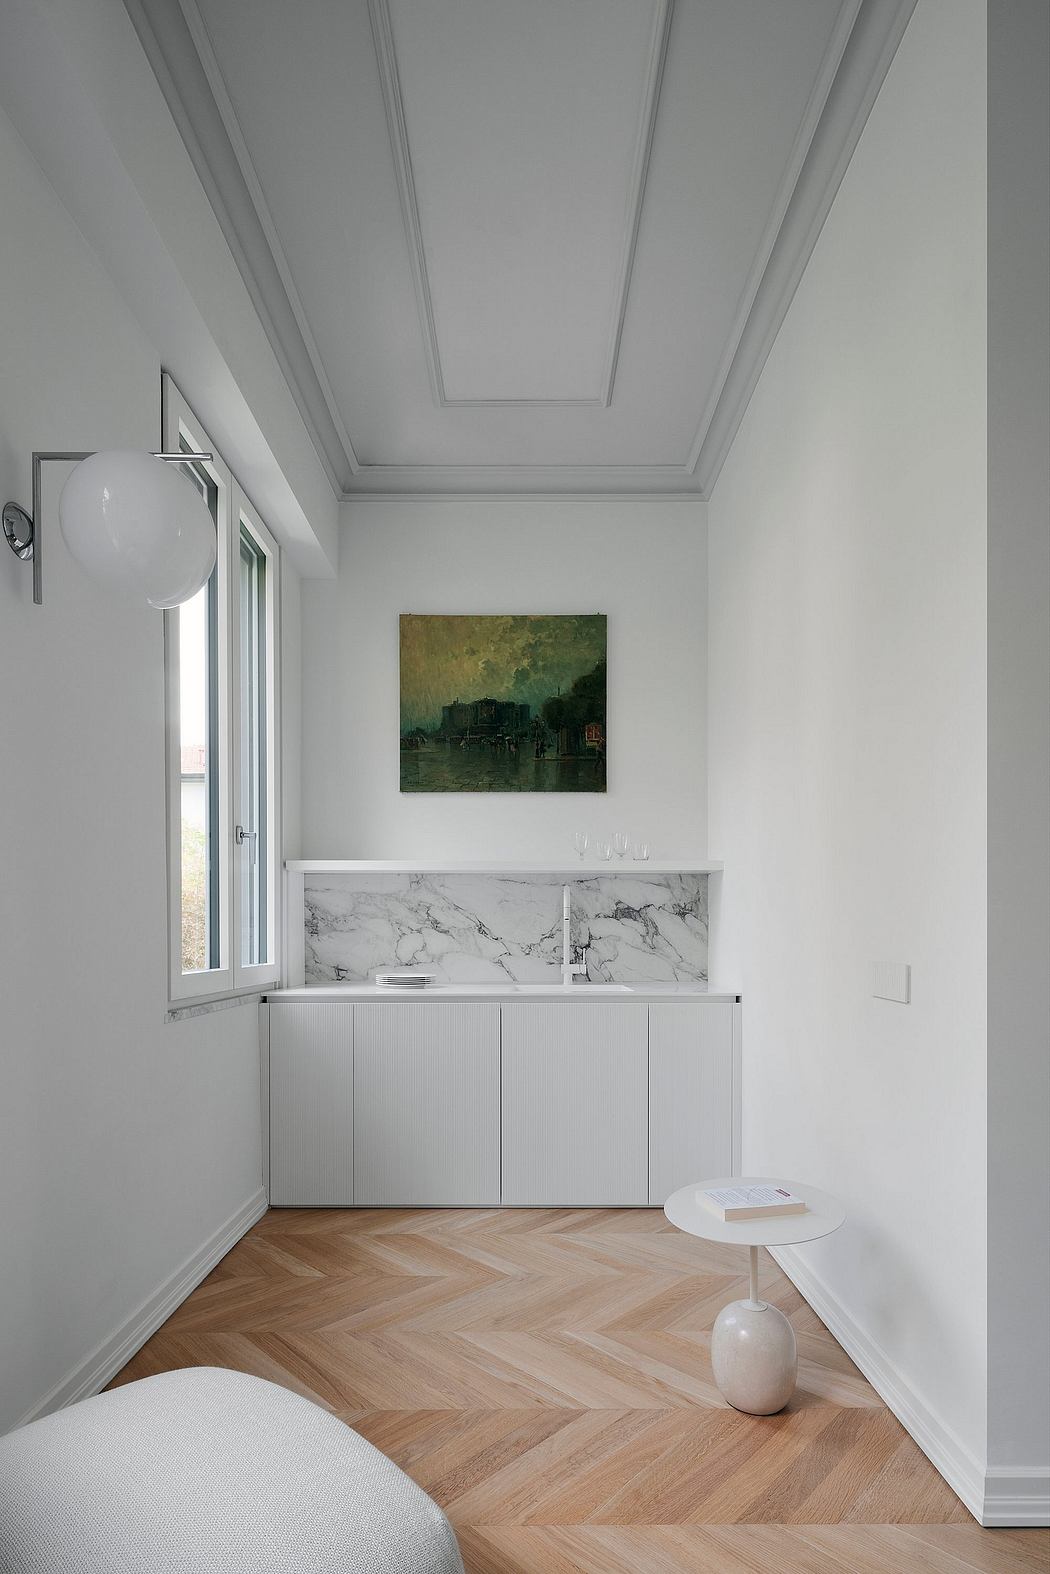 Elegant interior with herringbone floor, classic ceiling moldings, and marble